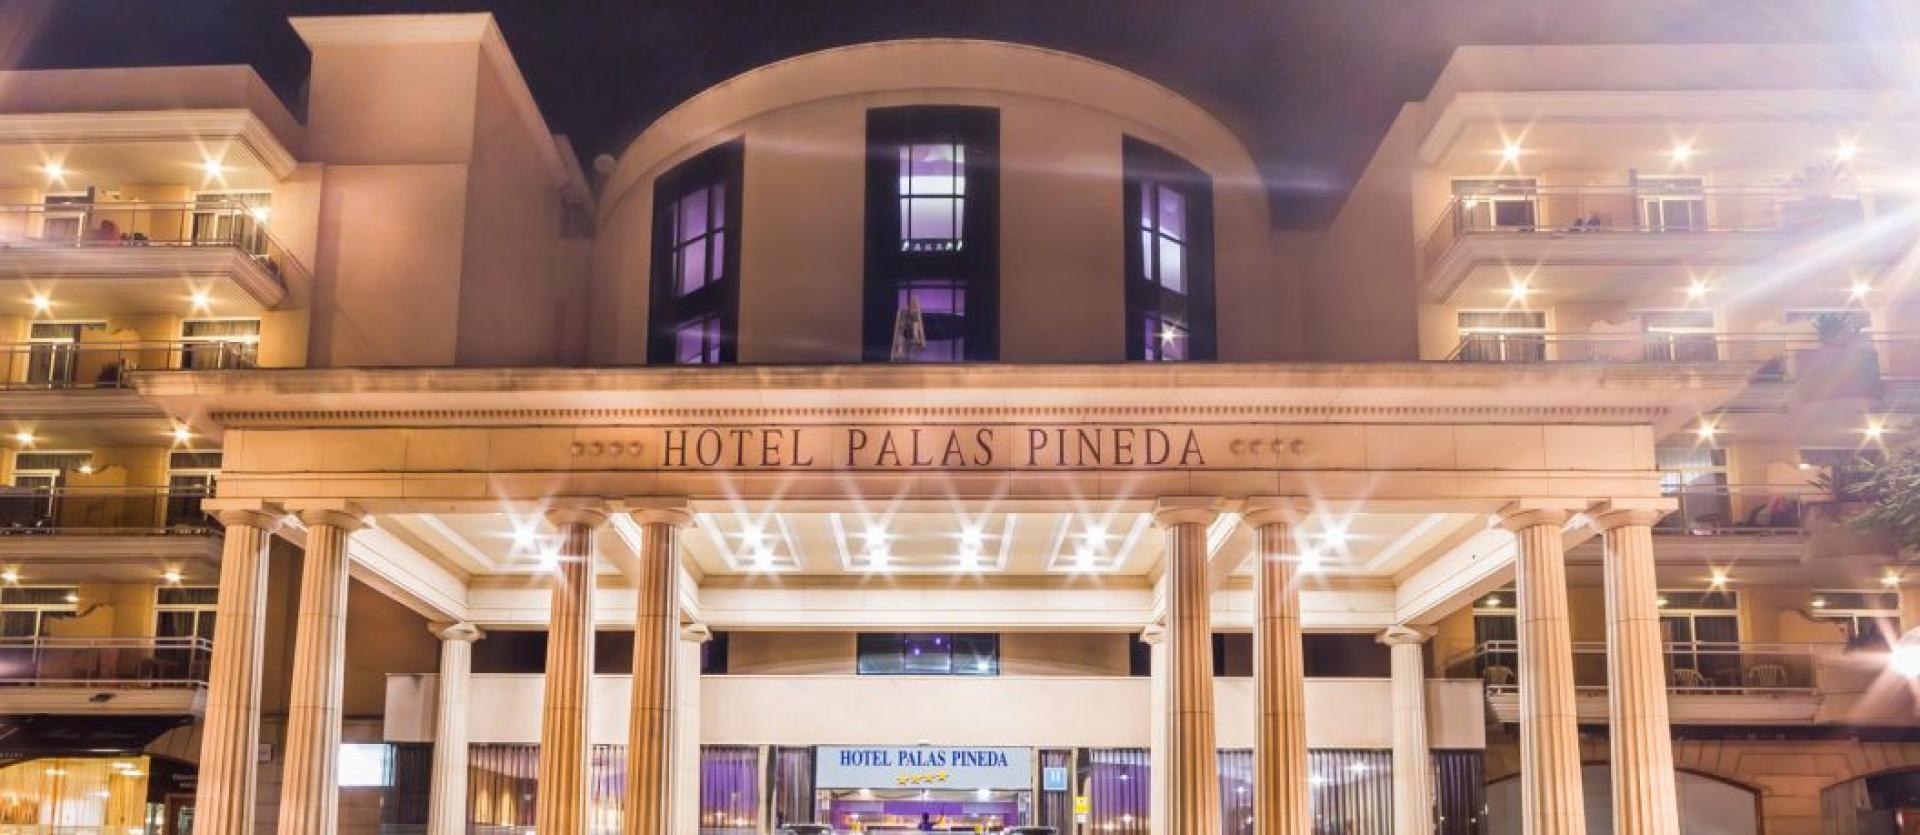 HOTEL PALAS PINEDA ****